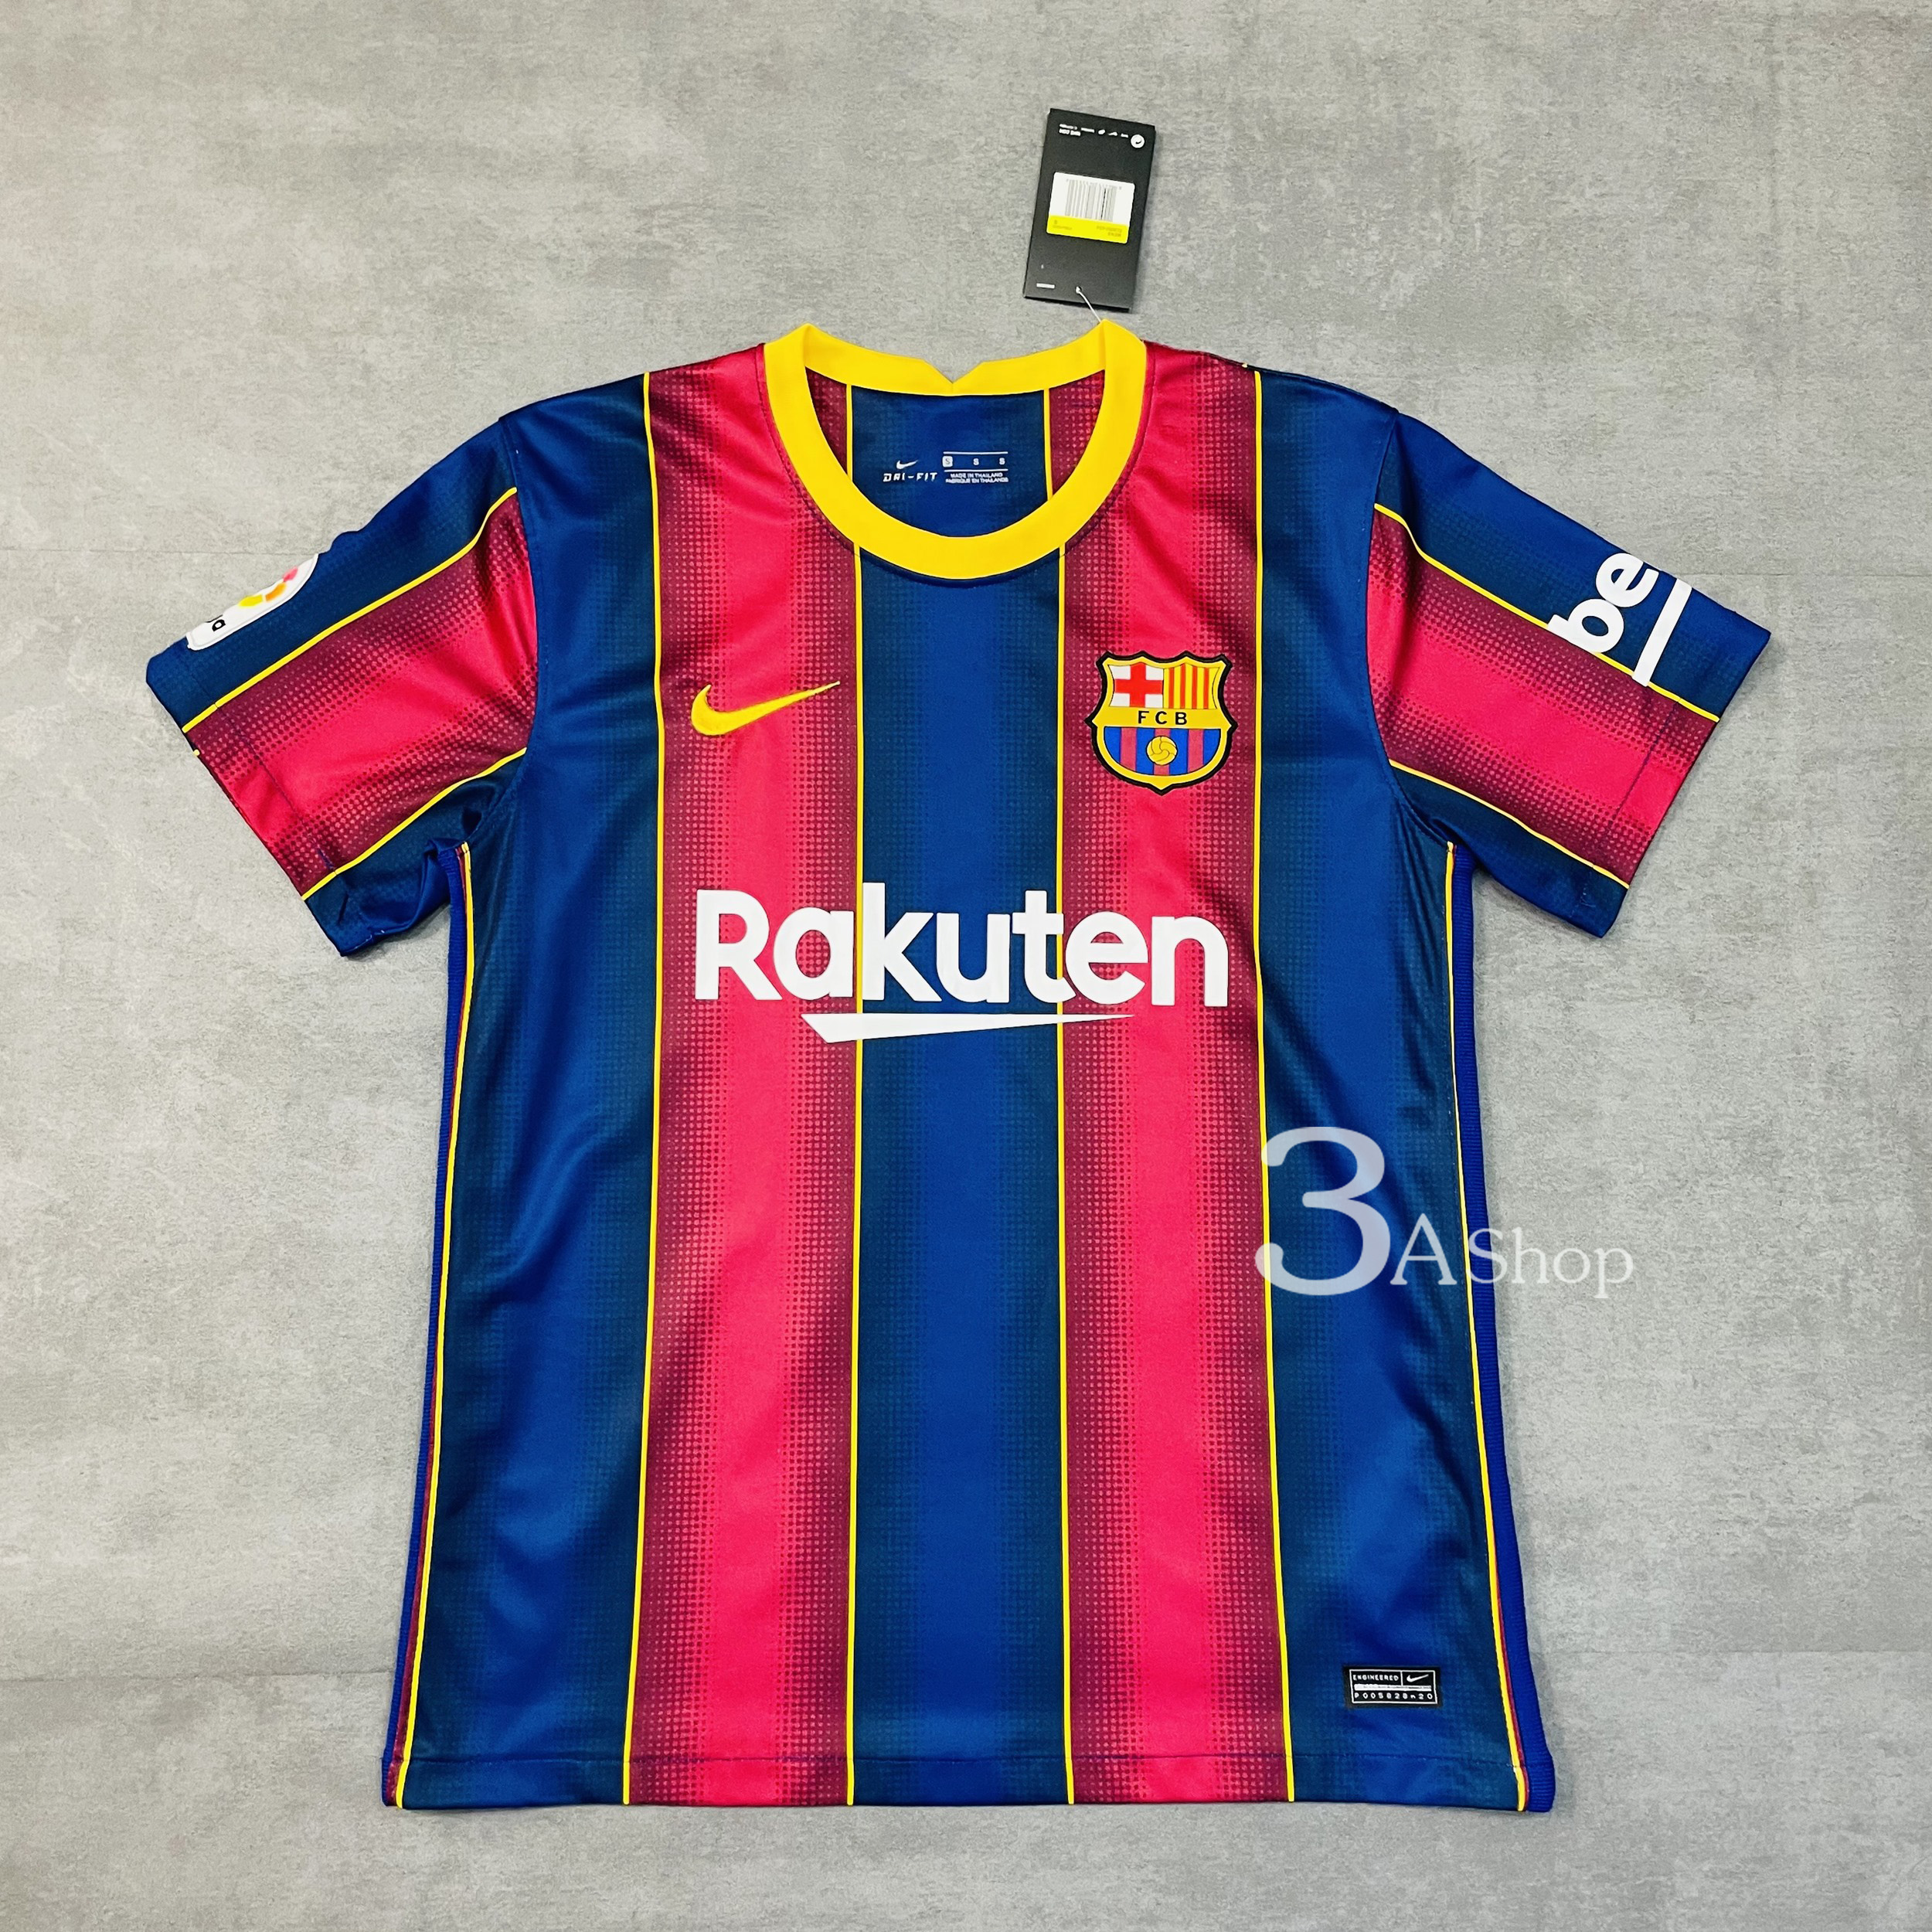 Barcelona 2020/2021 Navy+ Red Home FOOTBALL SHIRT SOCCER JERSEY เสื้อบอล เสื้อฟุตบอล ทีมบาเซโลน่า งานคุณภาพ ผ้านุ่ม ใส่สบาย เกรด AAA